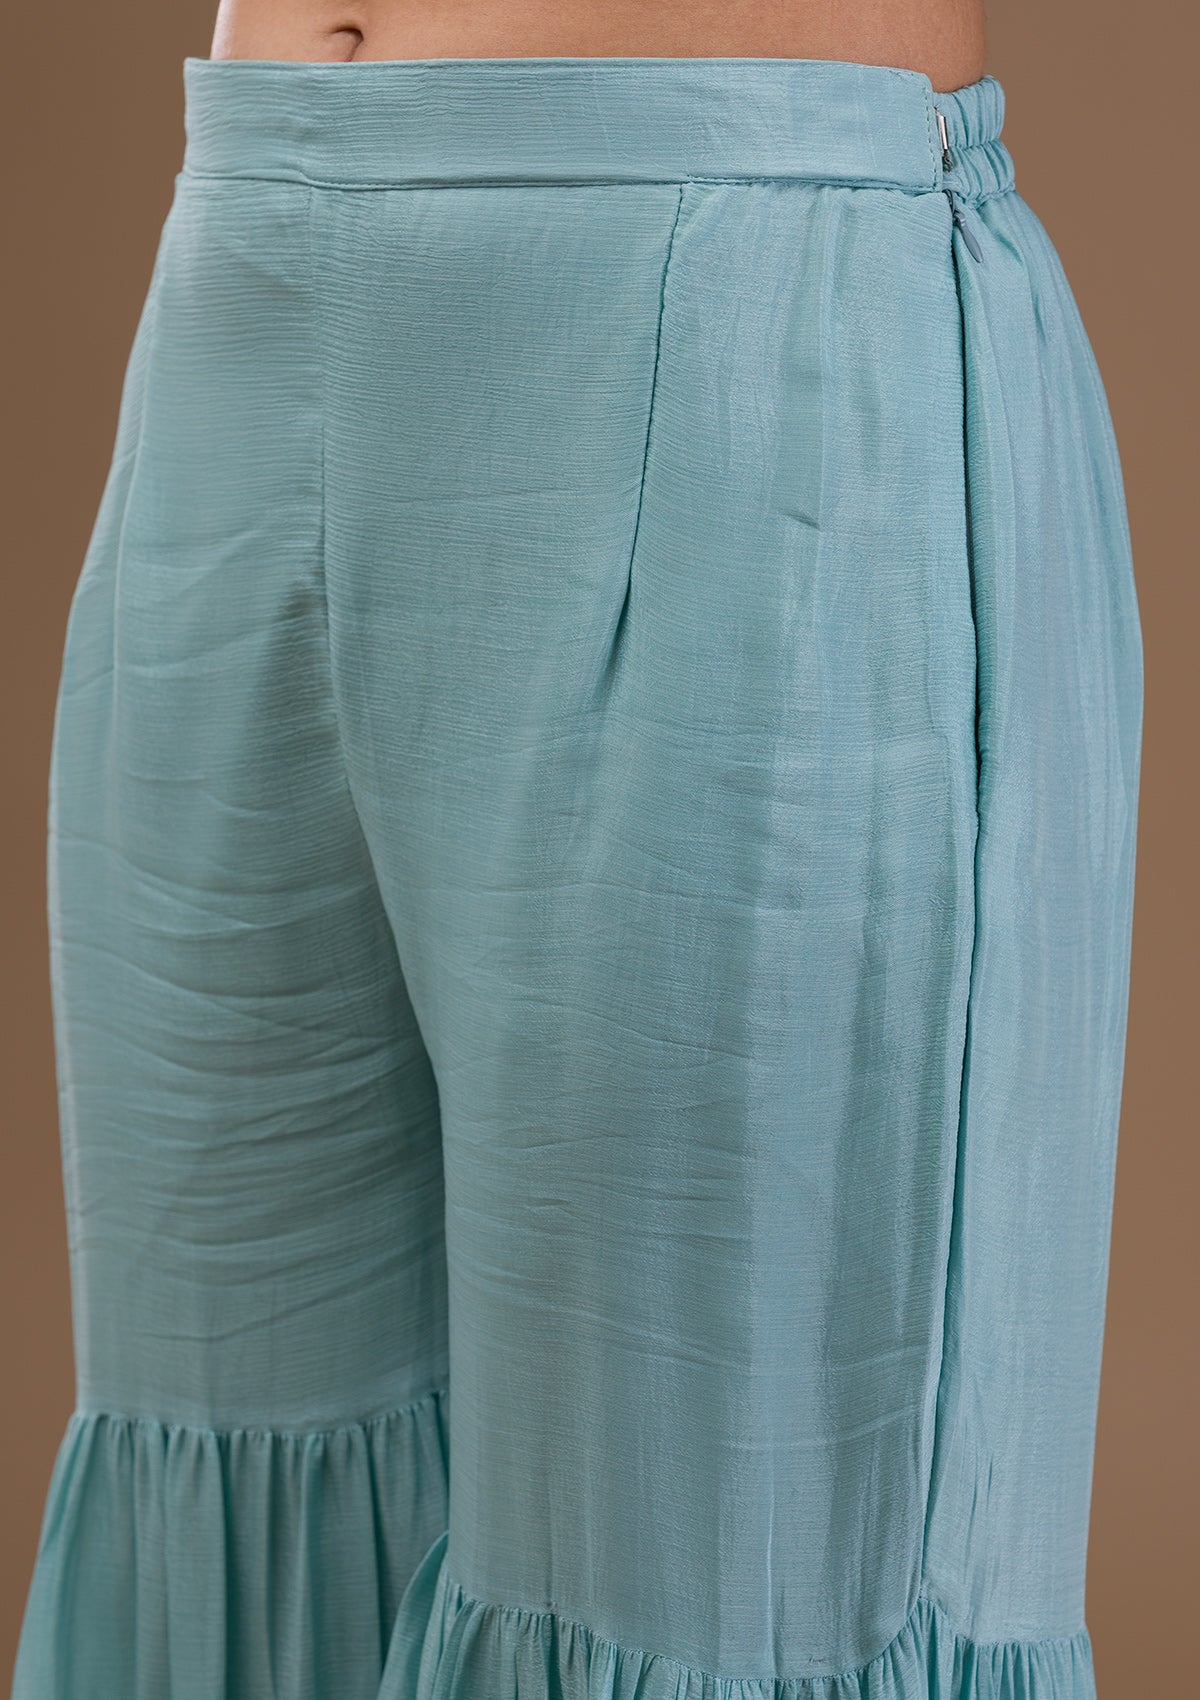 Sky Blue Threadwork Art Silk Readymade Salwar Suit